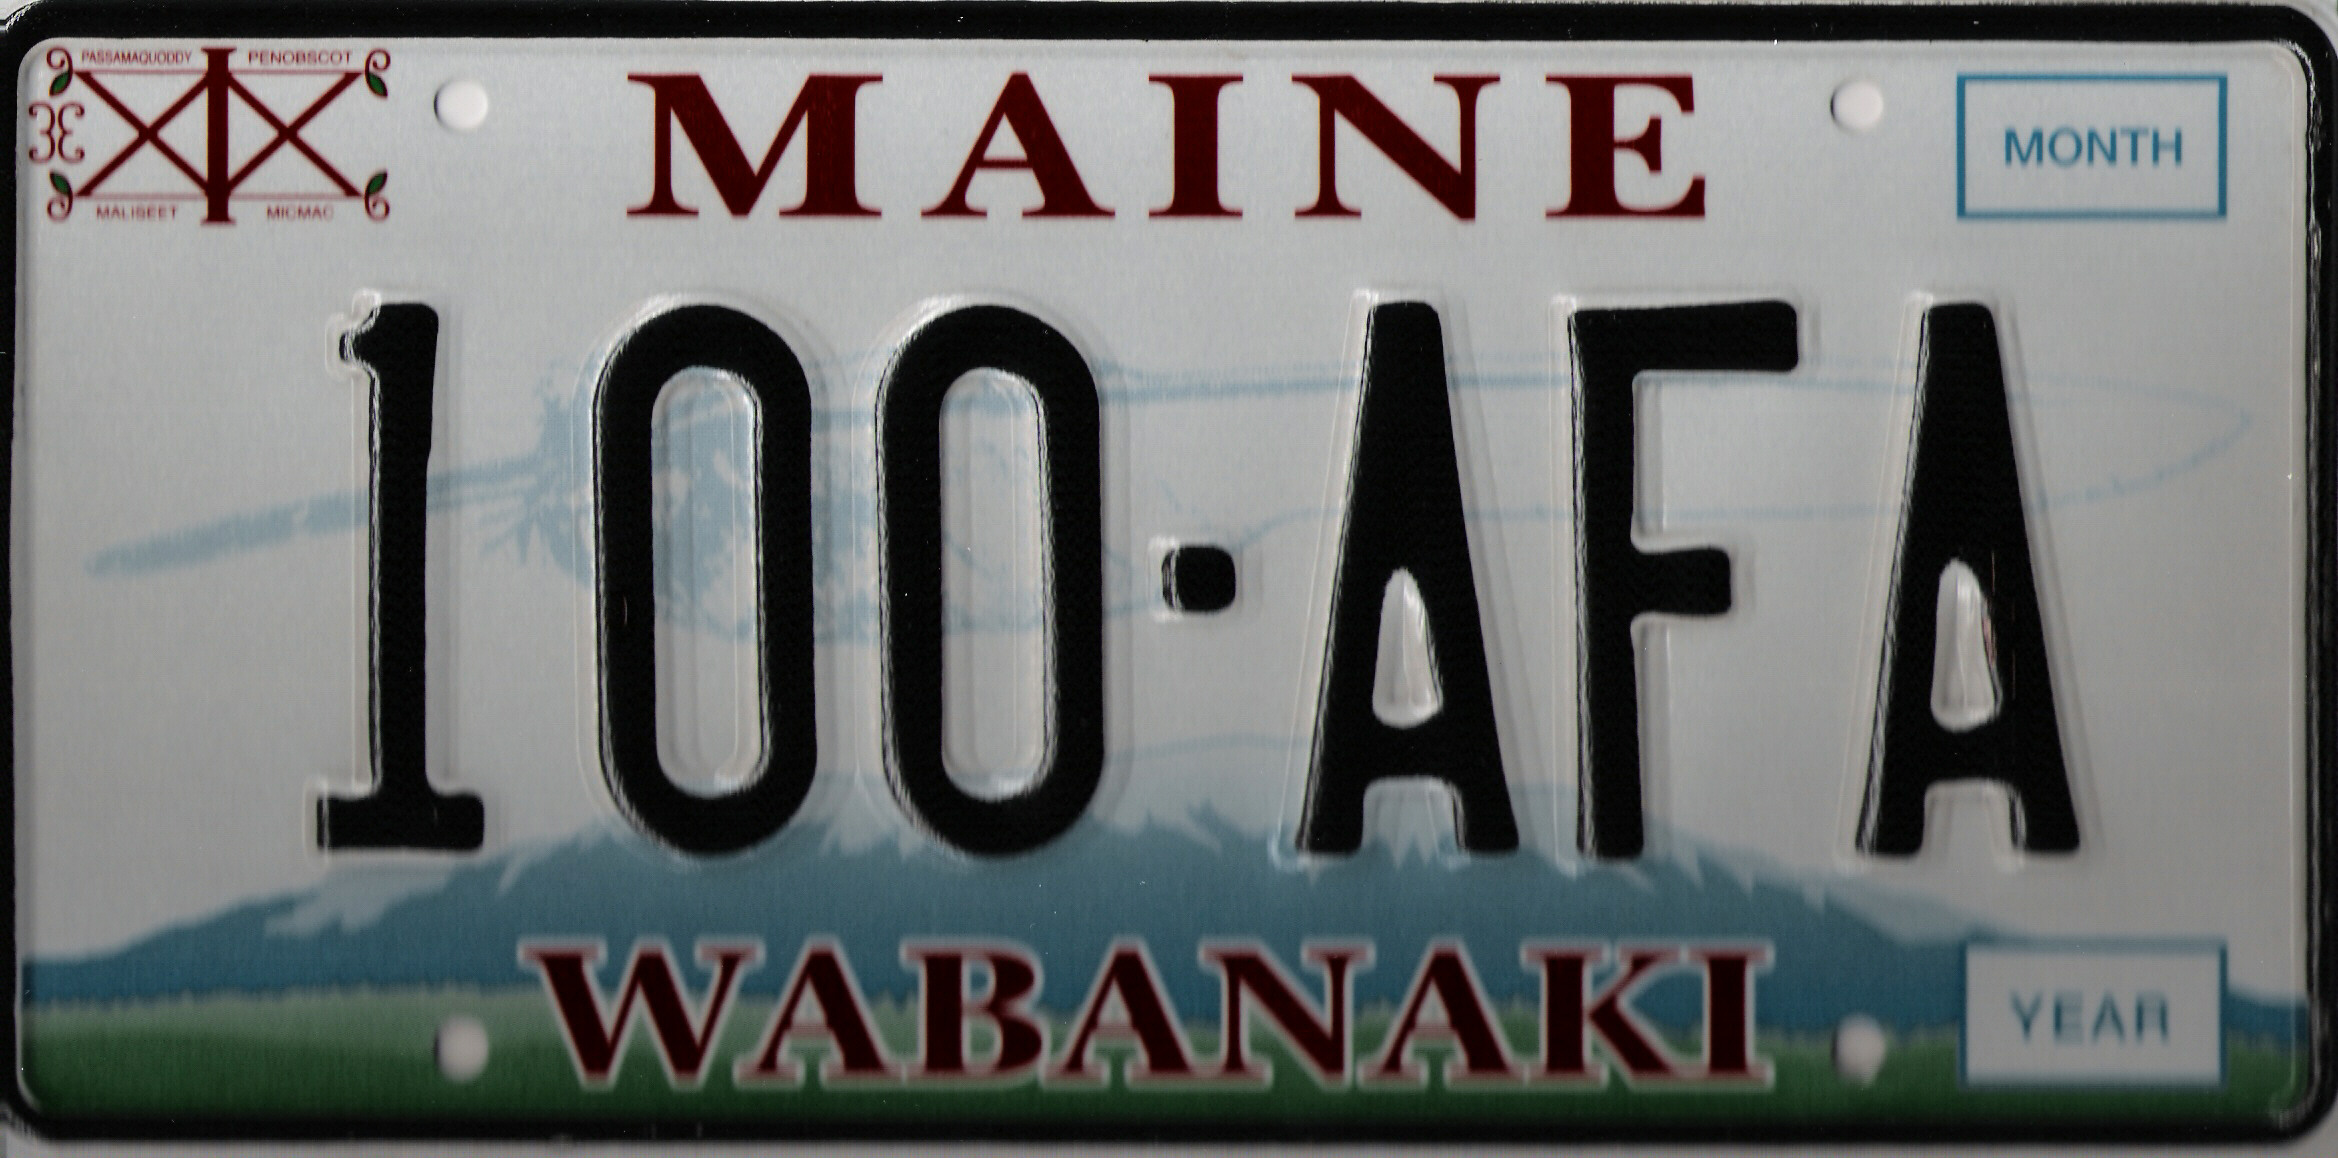 Image of the Wabanaki plate